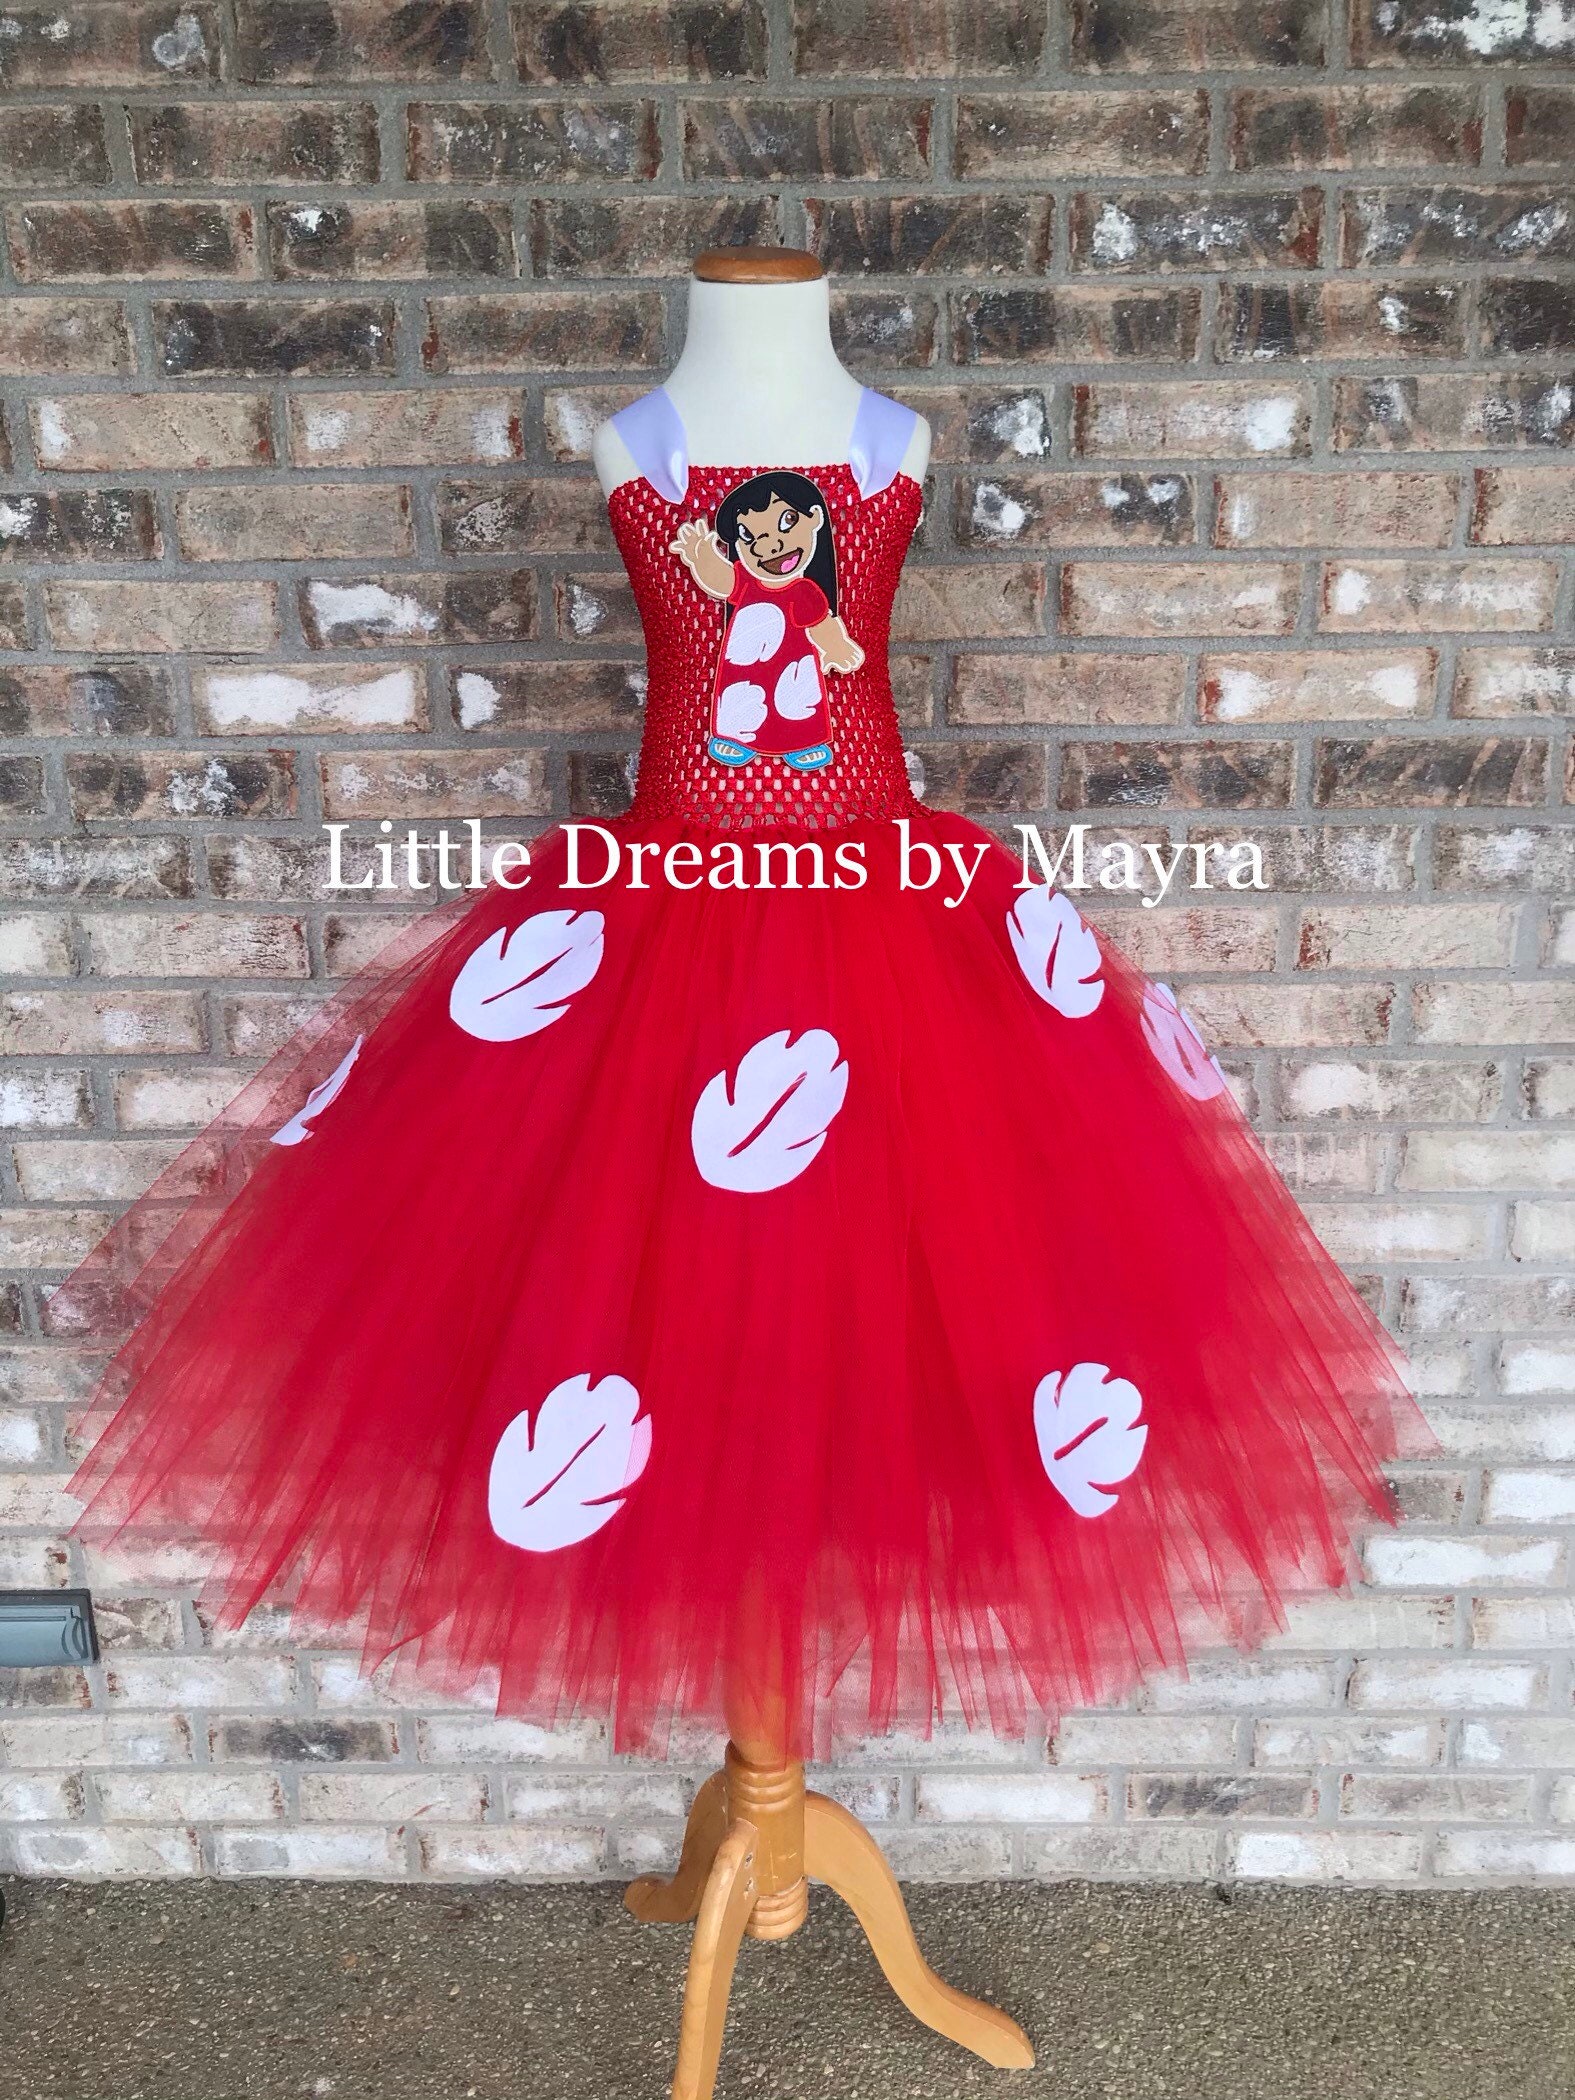 Robe dange, Costume Lilo & Stitch, Robe Disney pour femmes